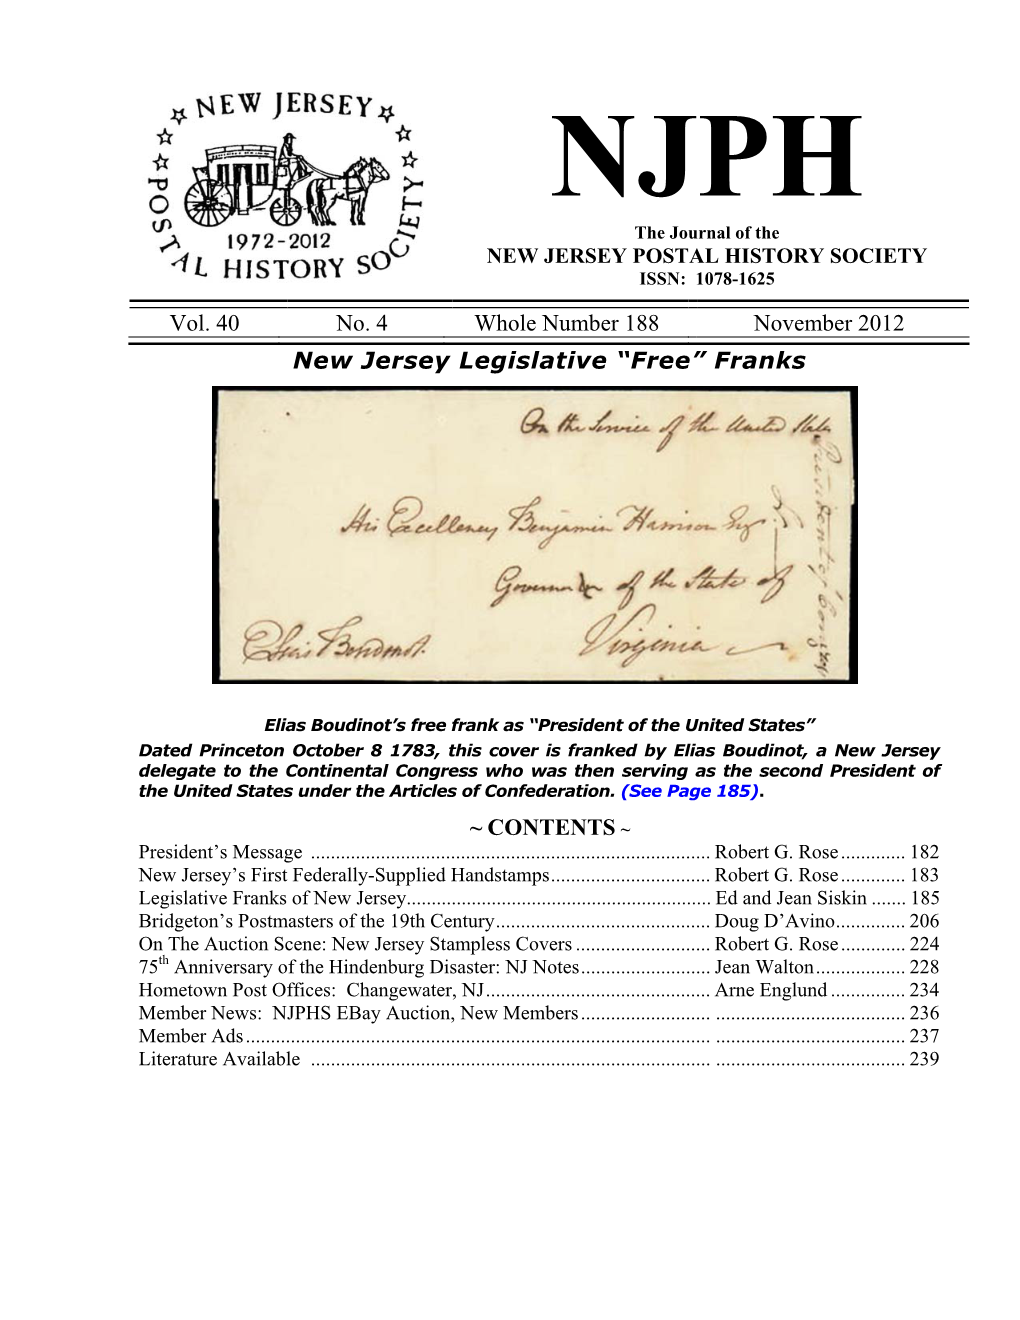 Vol. 40 No. 4 Whole Number 188 November 2012 New Jersey Legislative “Free” Franks